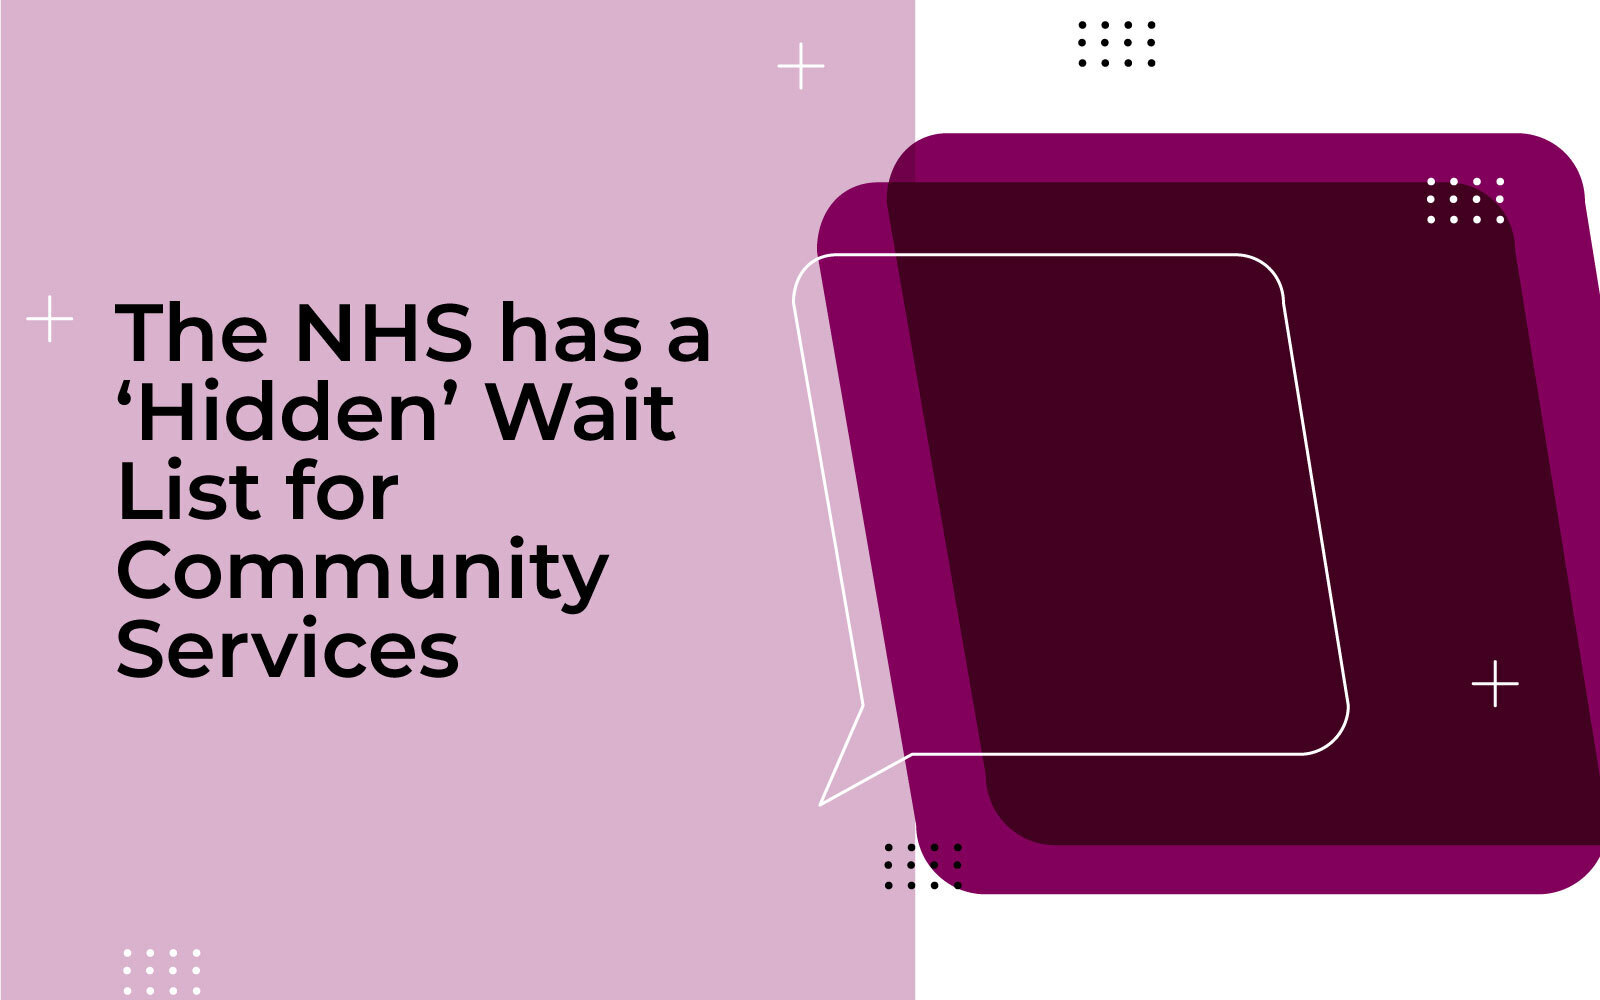 The NHS has a ‘Hidden’ Wait List for Community Services